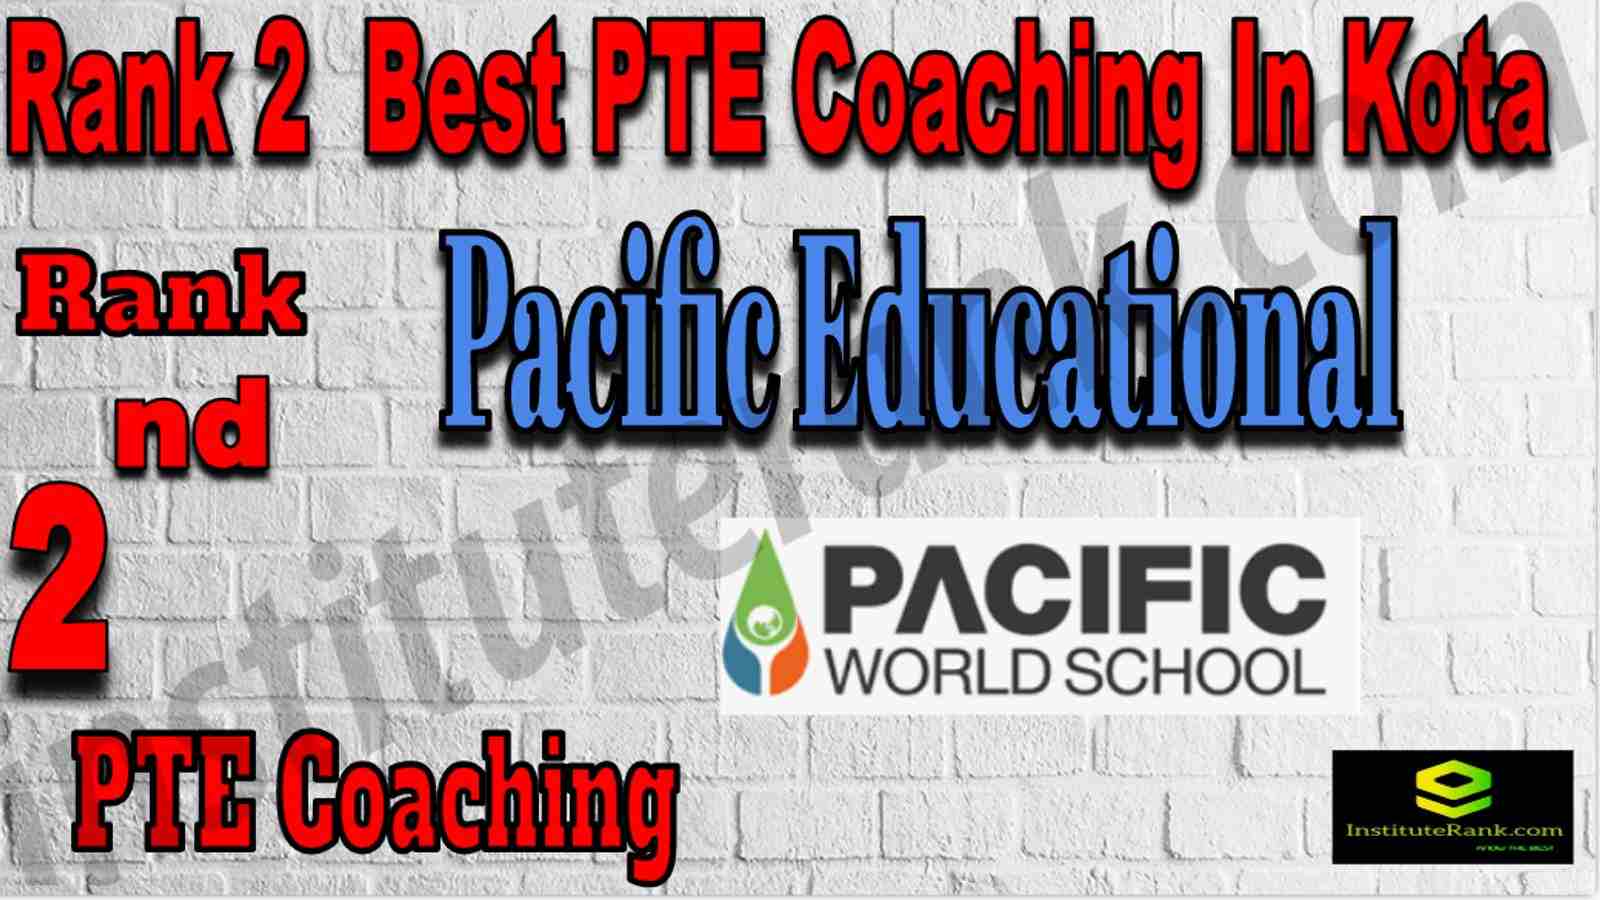 Rank 2 Best PTE Coaching In Kota